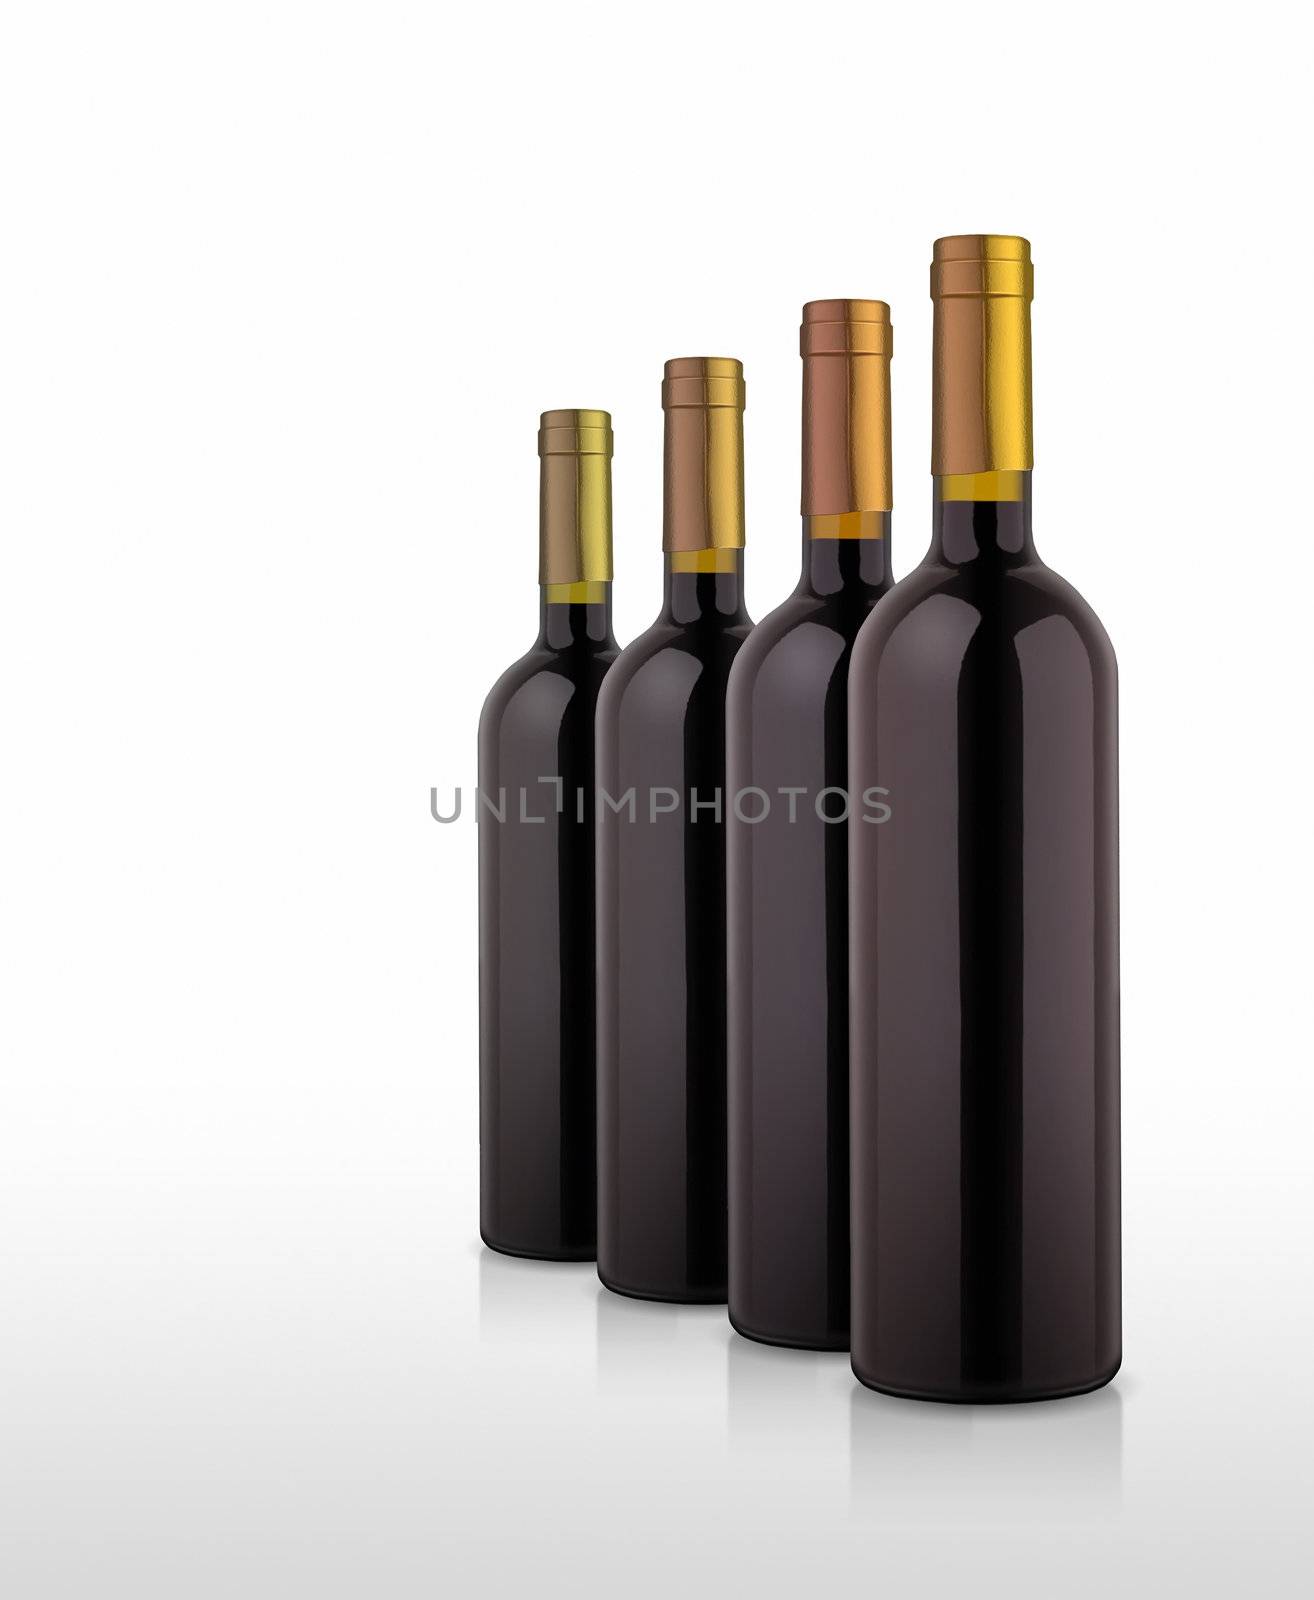 An illustration of some nice wine bottles